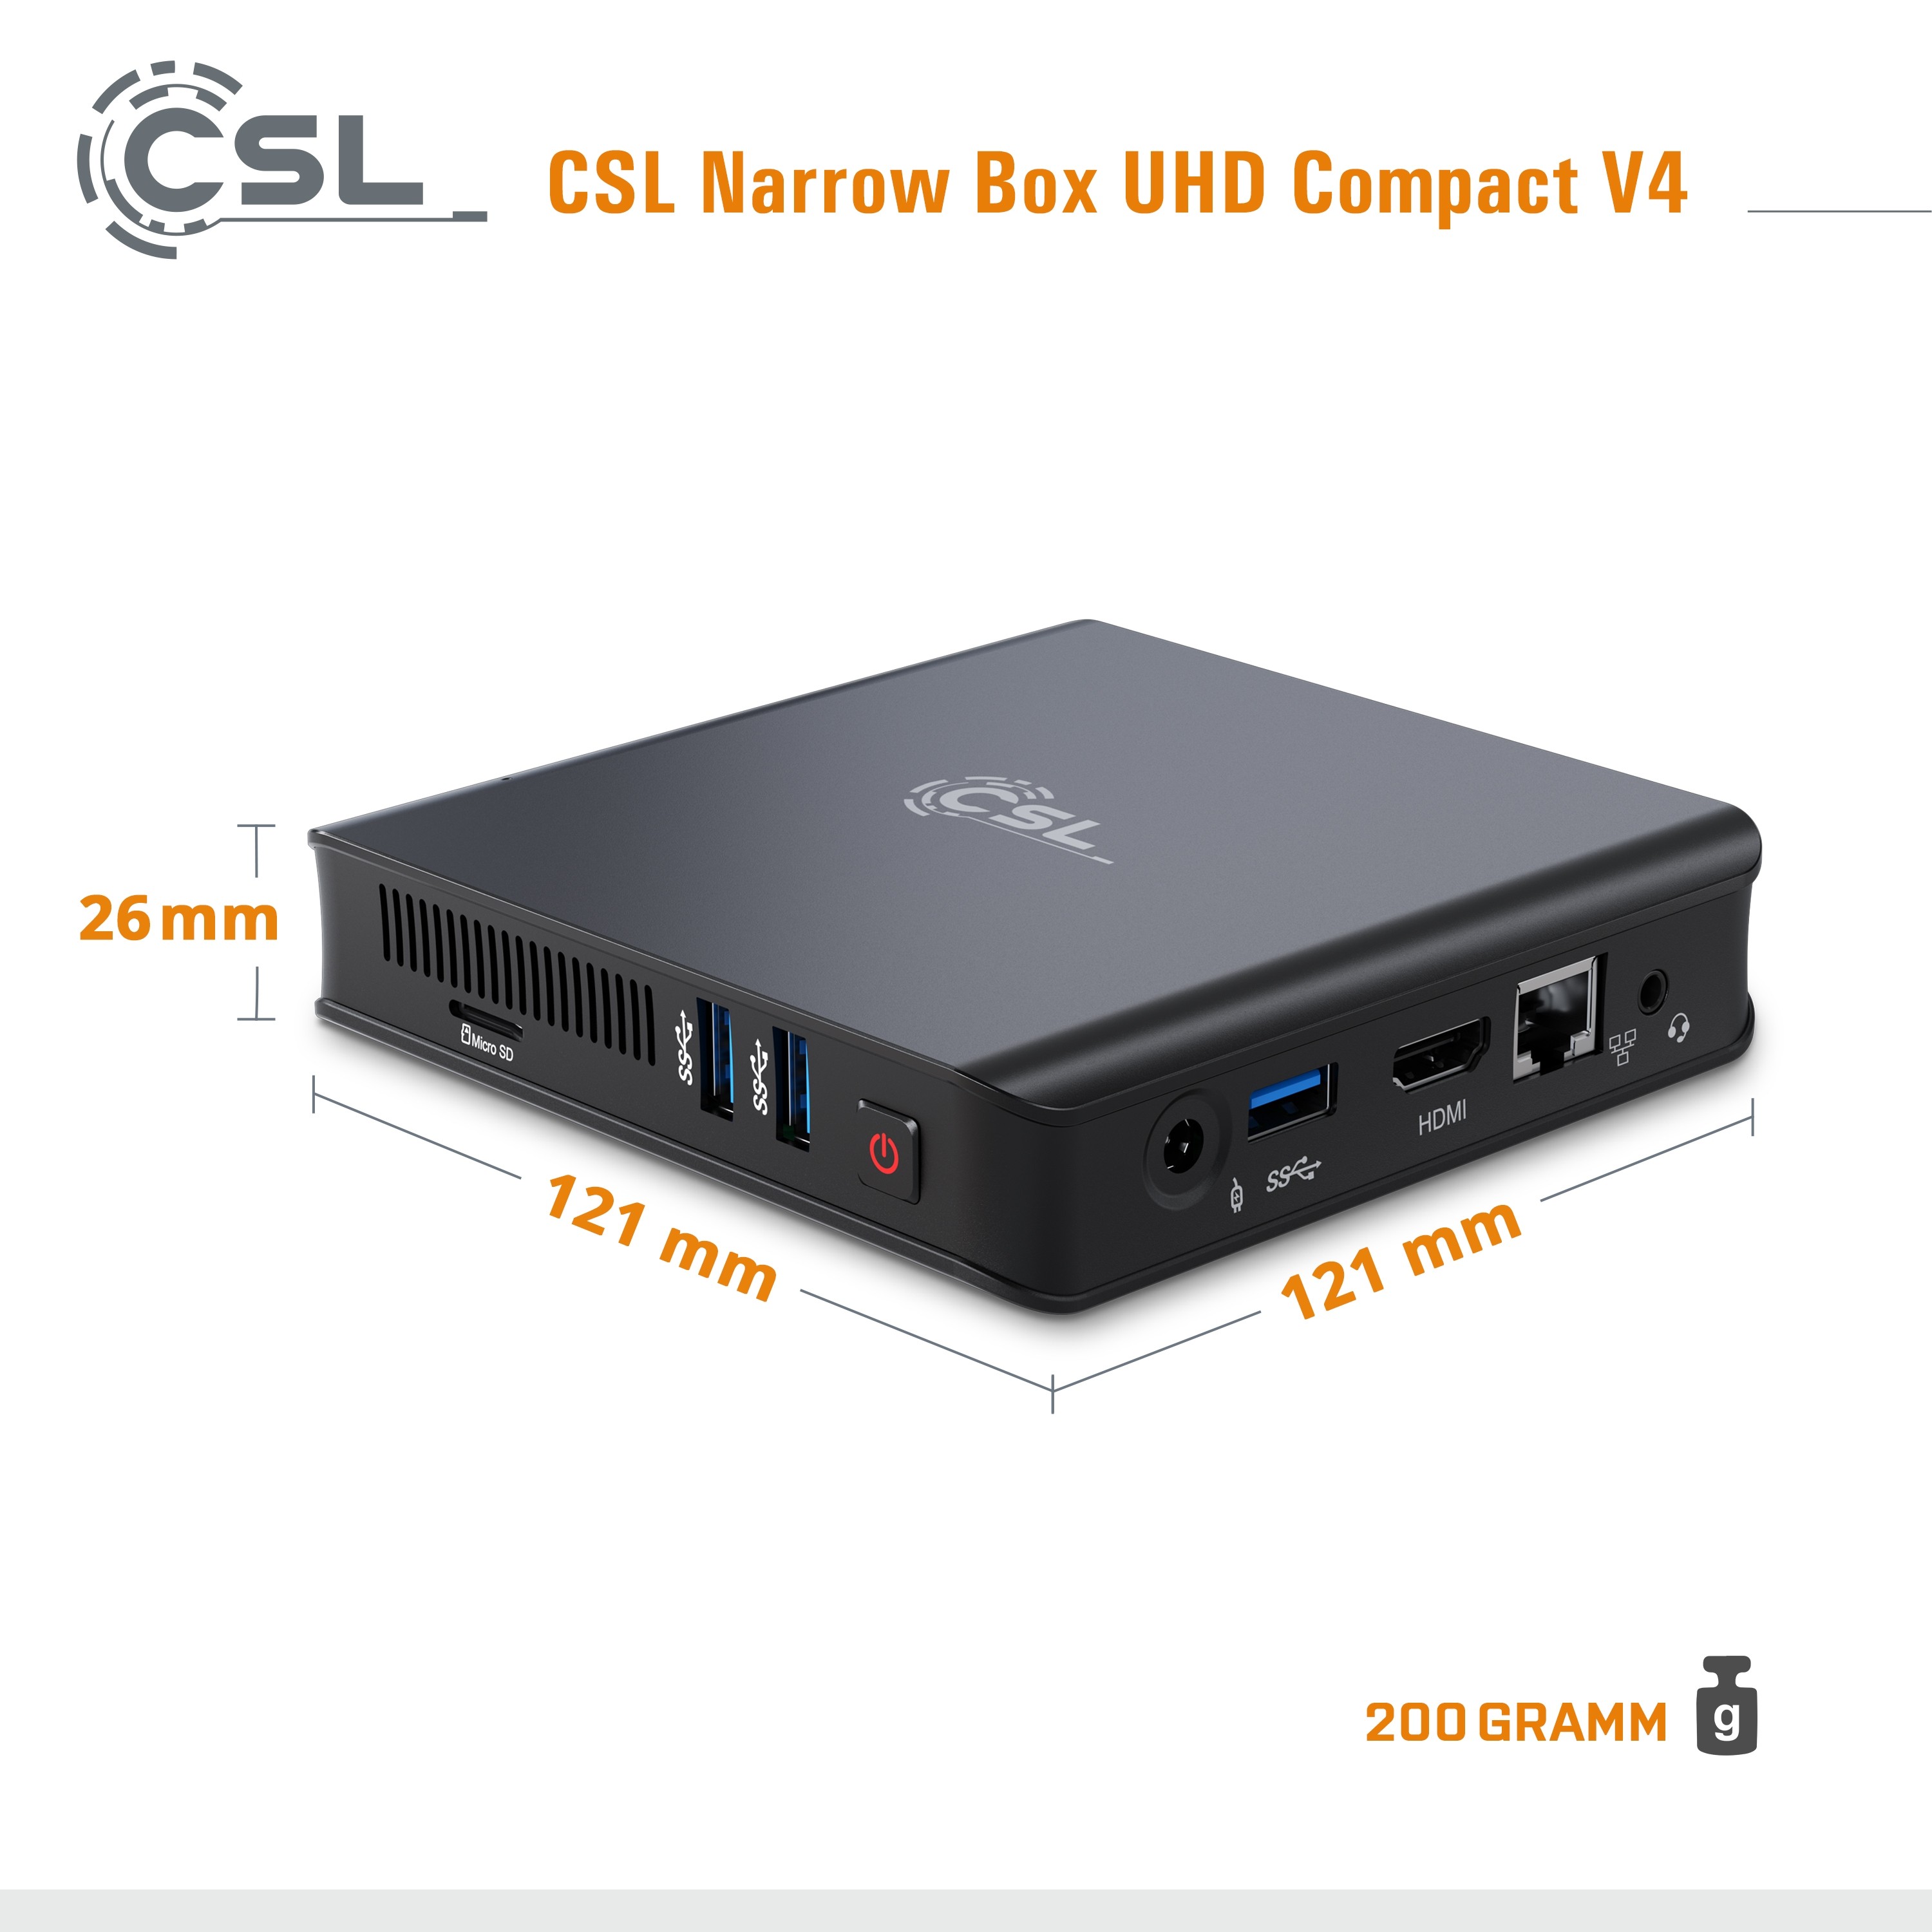 Narrow Computer | 10 PC CSL CSL / Box Home - HD Compact v4 Windows Ultra Mini